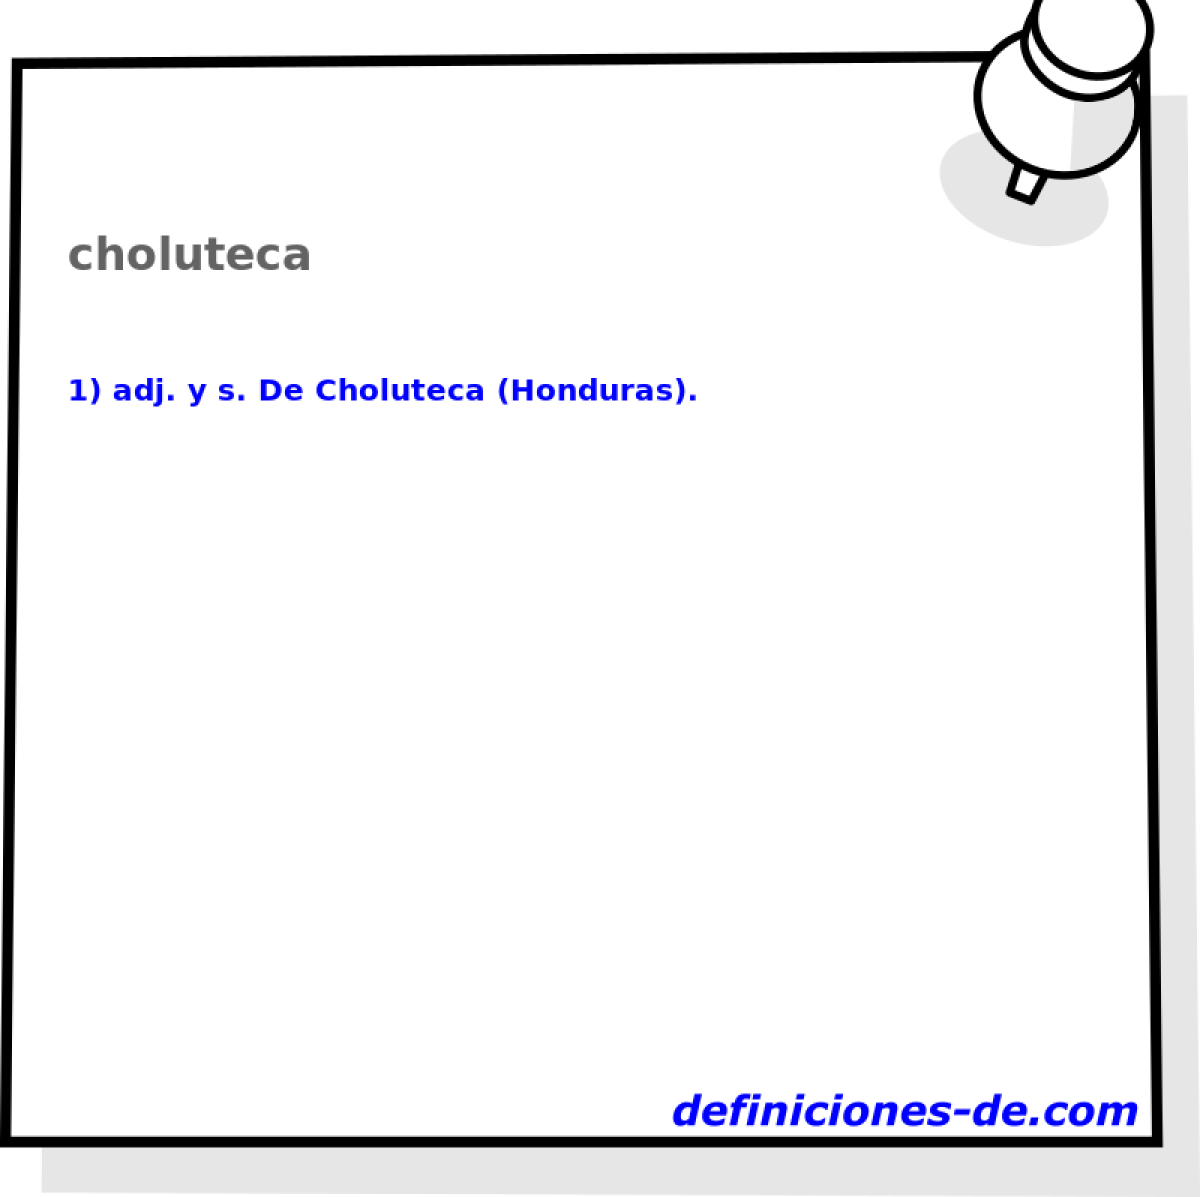 choluteca 